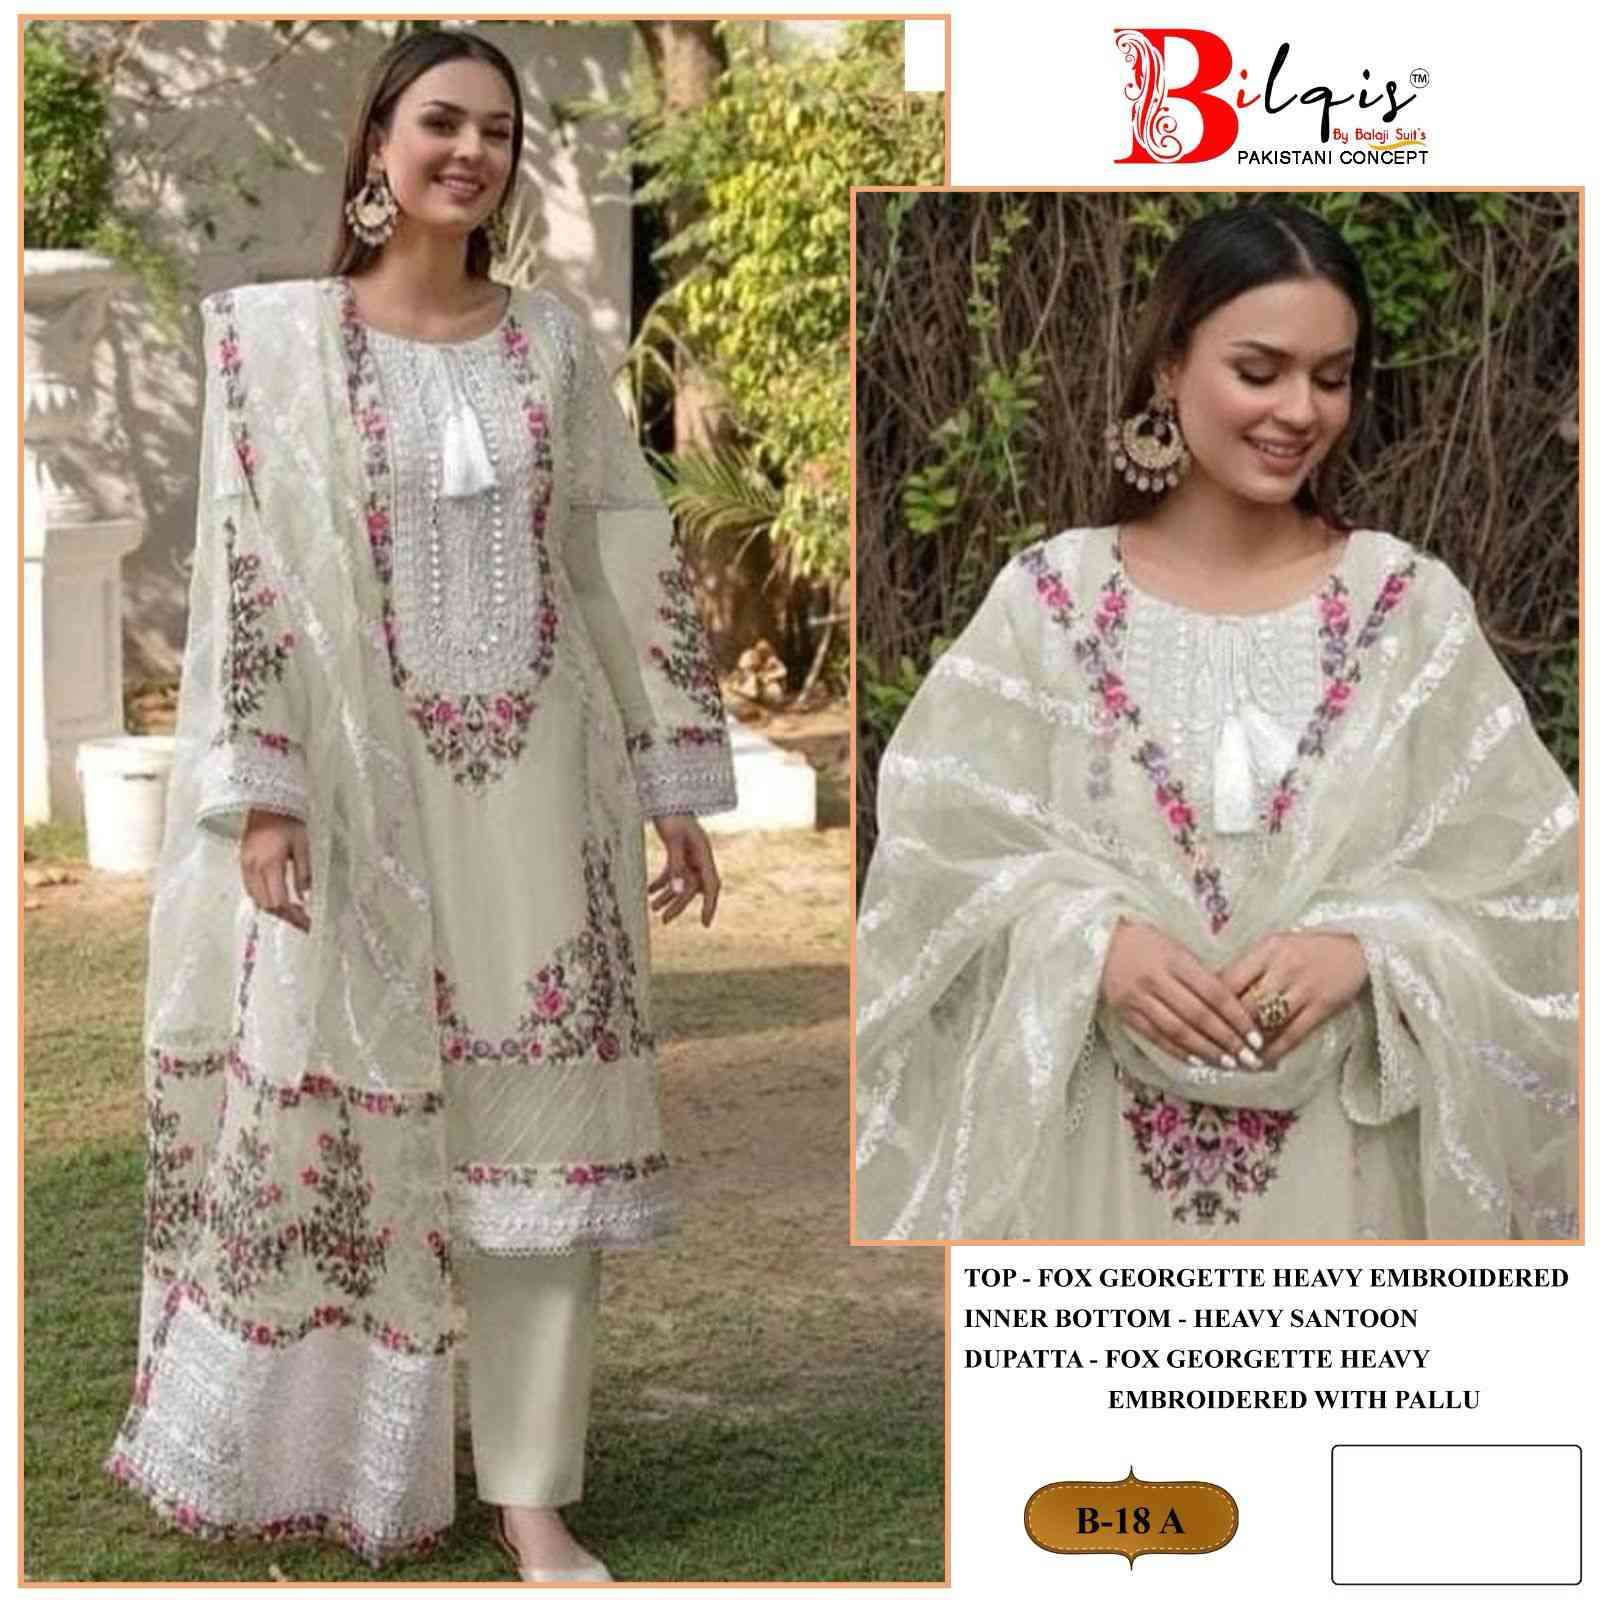 Bilqis B 18 Colors Designer Embroidered Pakistani Dress Suppliers